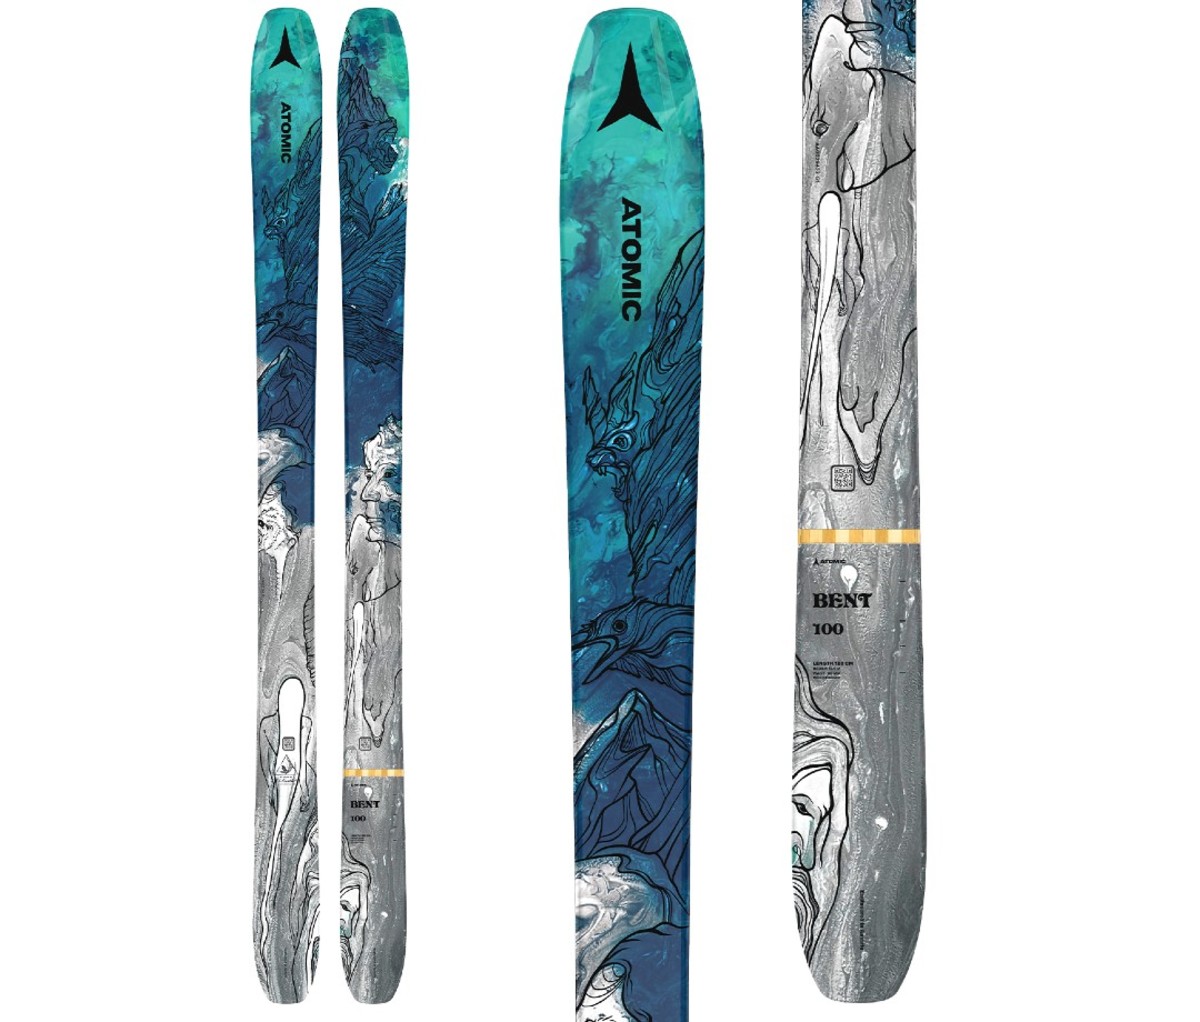 Atomic Bent 100 skis in three different close-ups